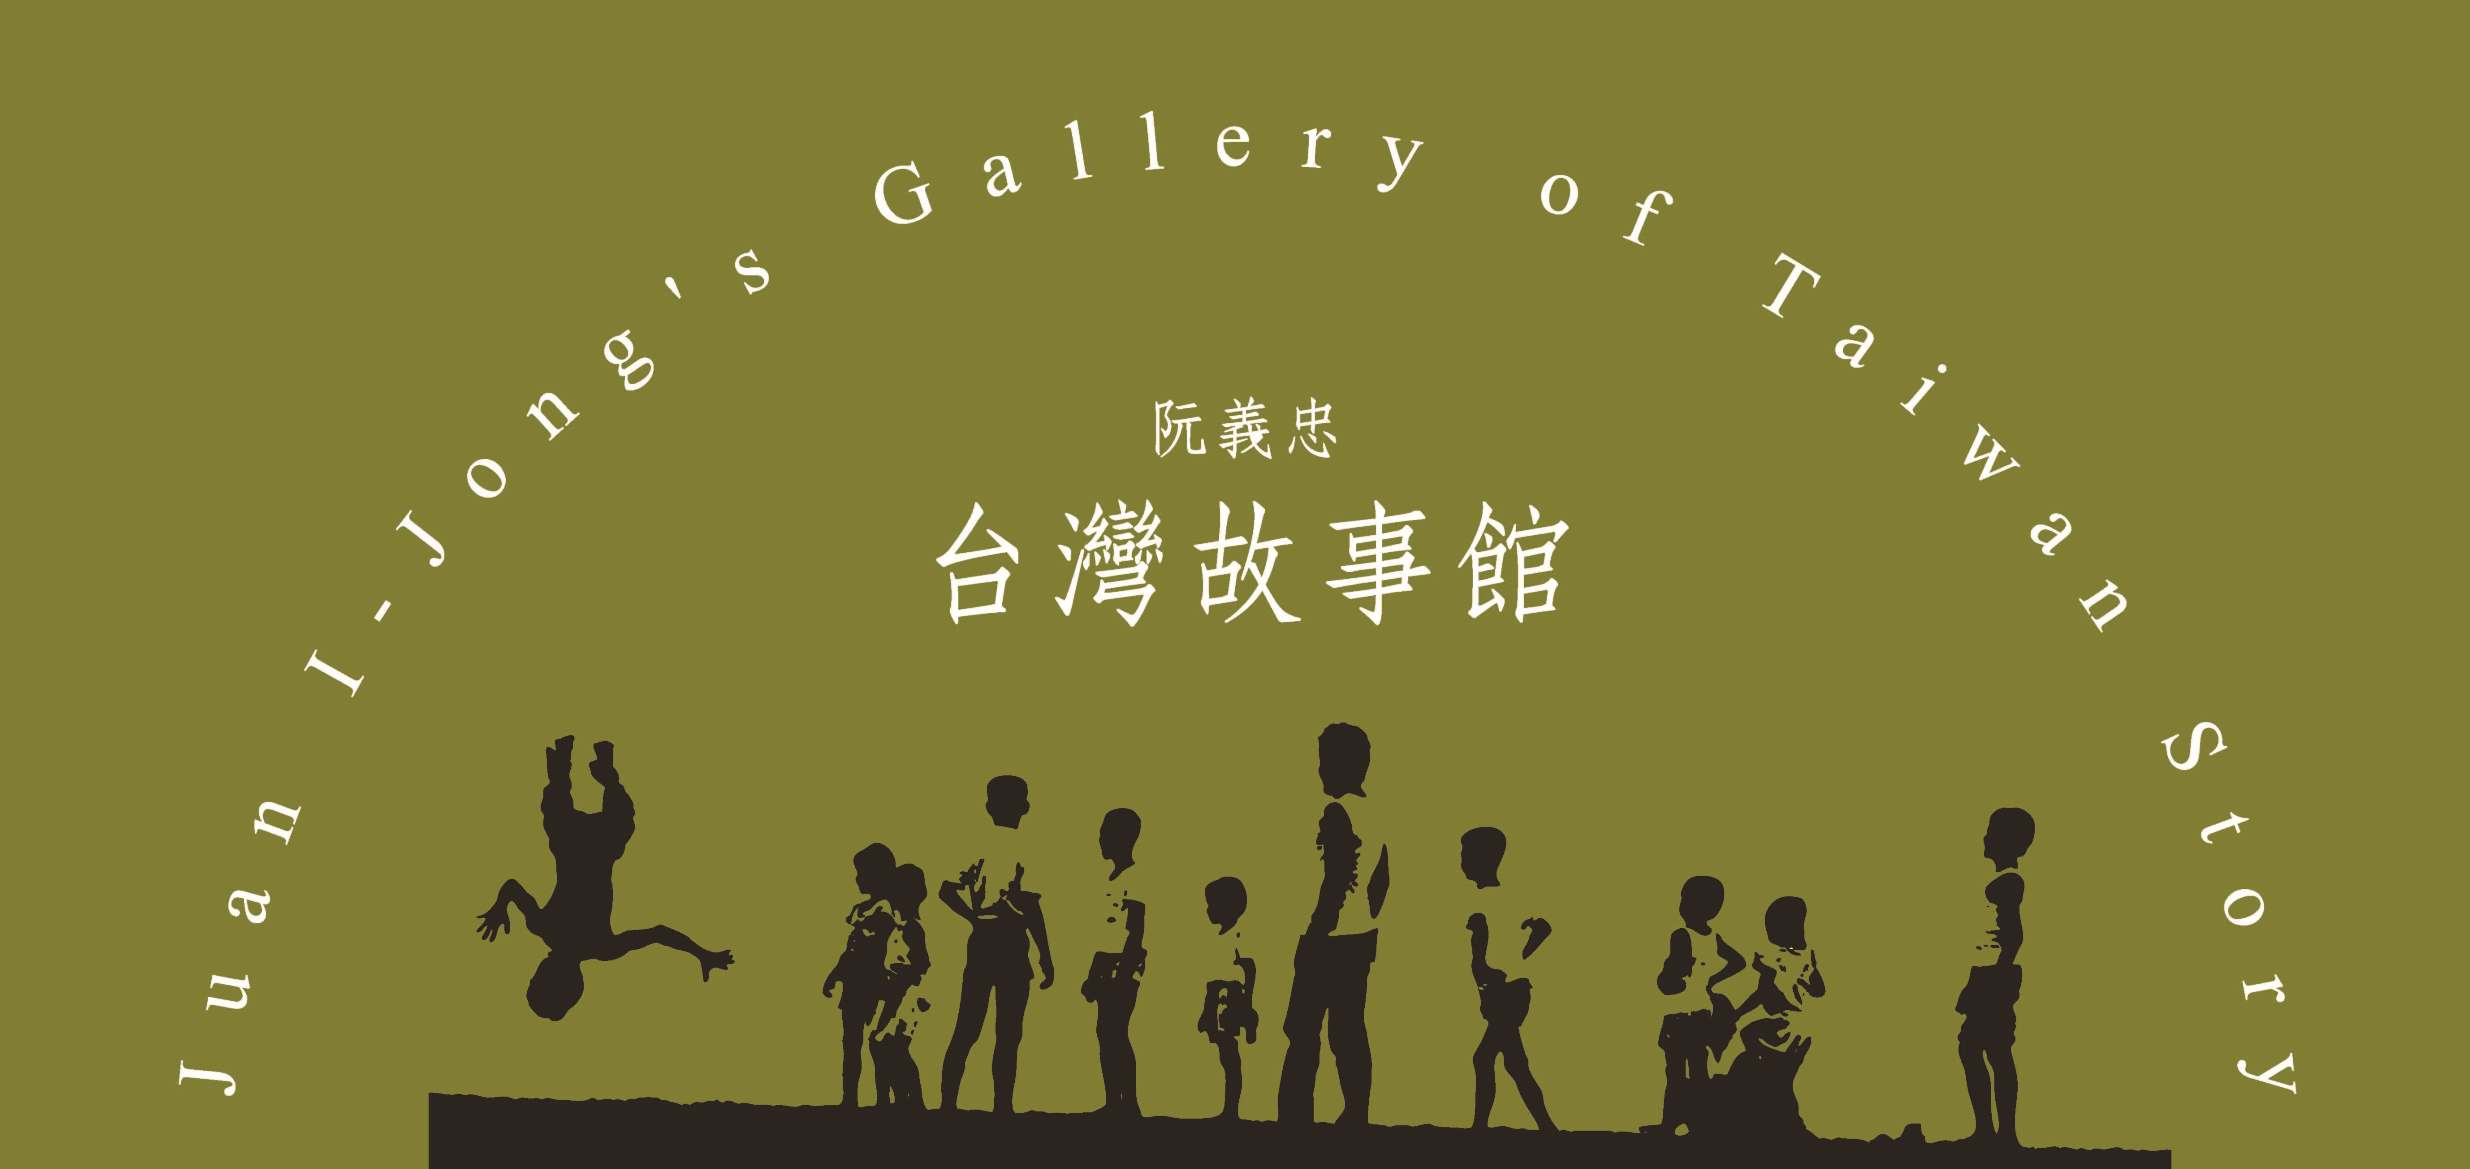 Juan I-jong’s Gallery of Taiwan Story